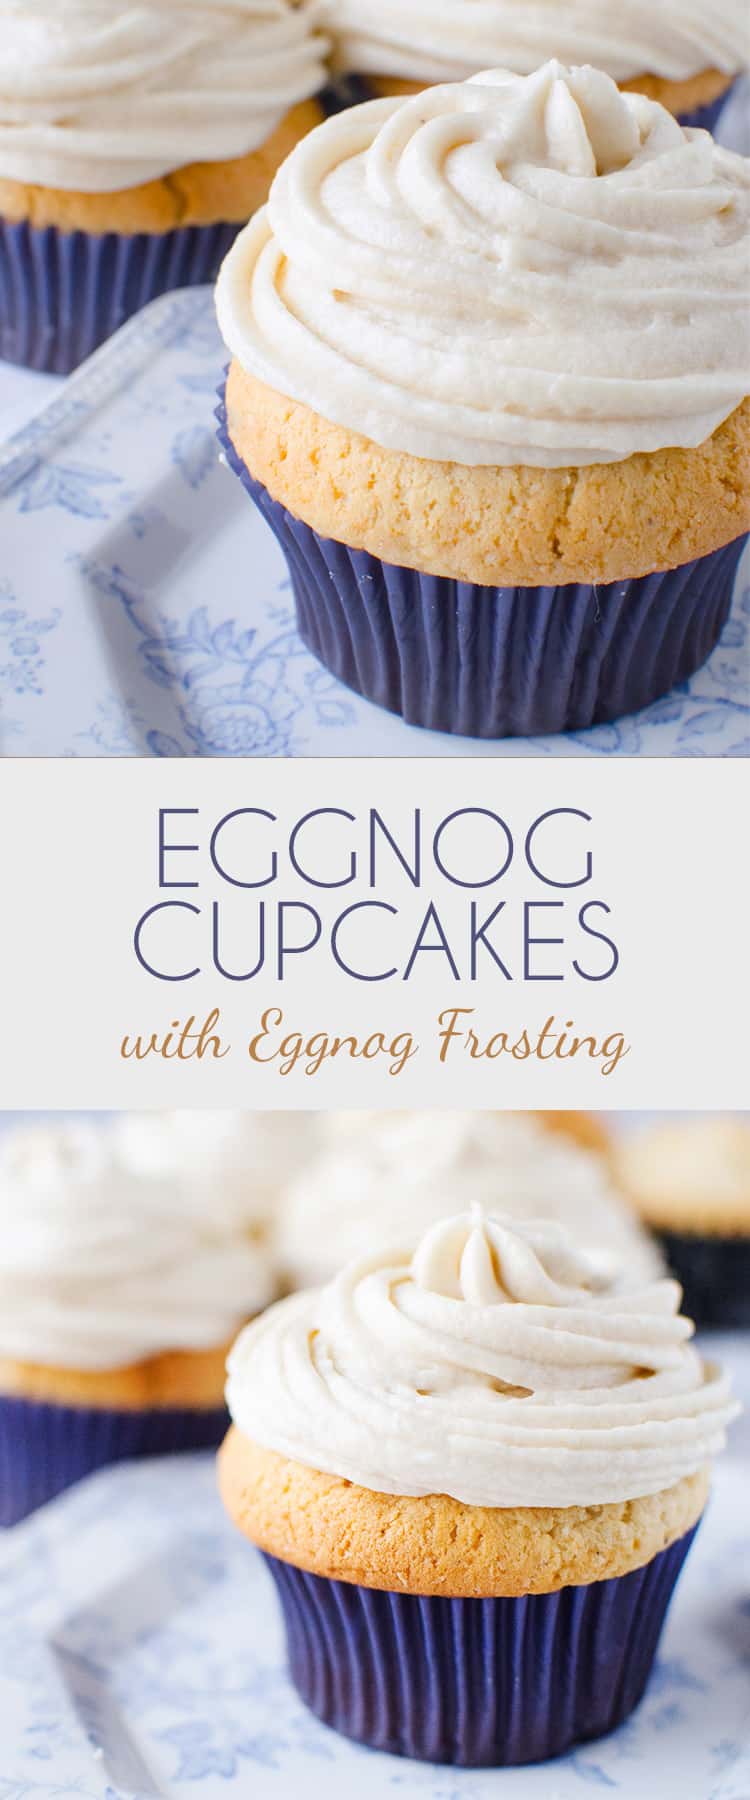 easy to make Eggnog Cupcakes with Eggnog Frosting recipe